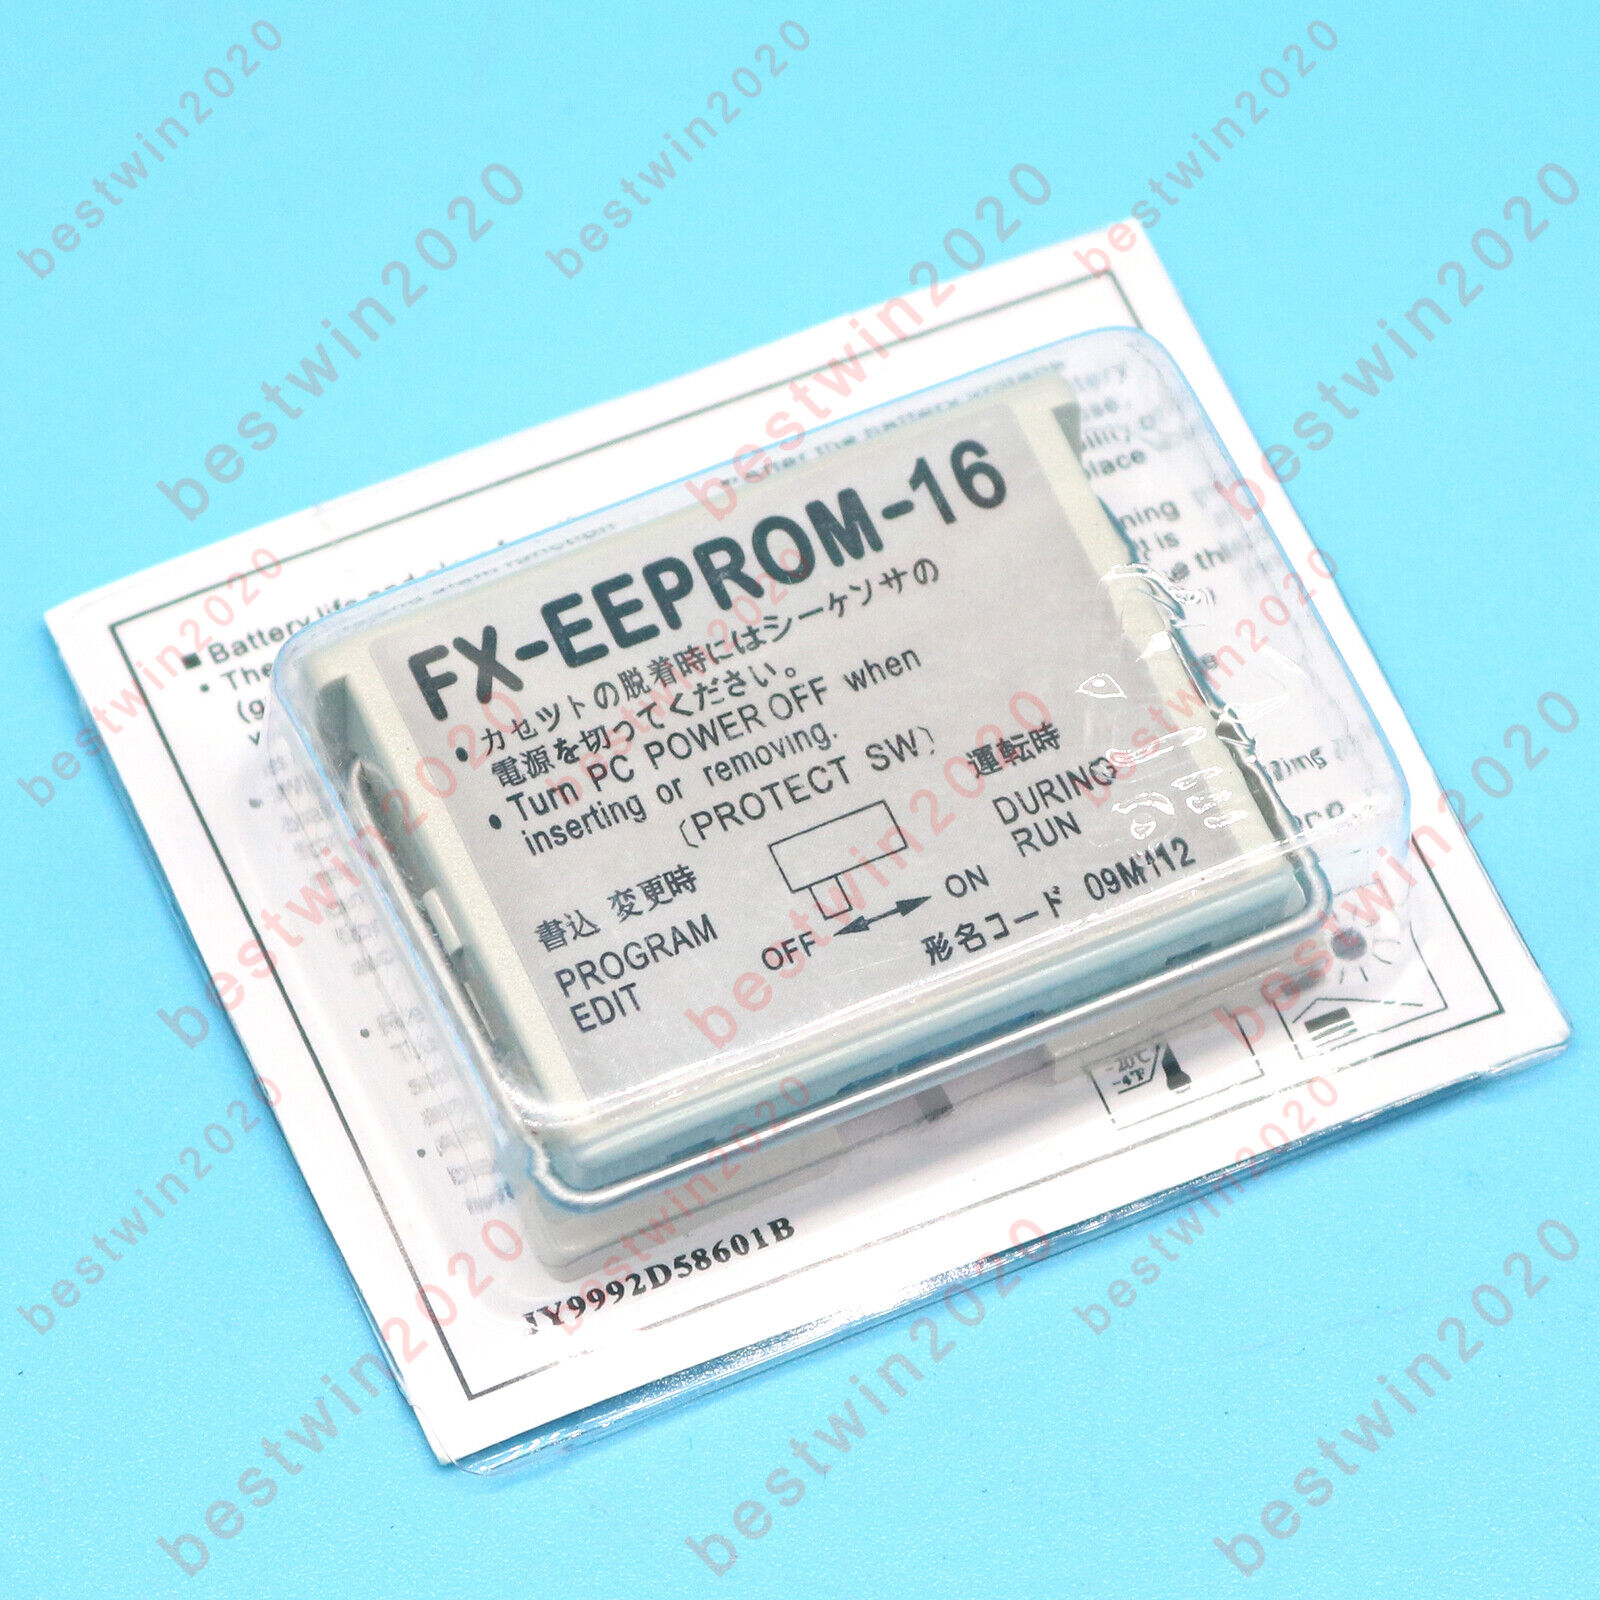 New Mitsubishi PLC memory card FX-EEPROM-16 IN BOX 1 year warranty